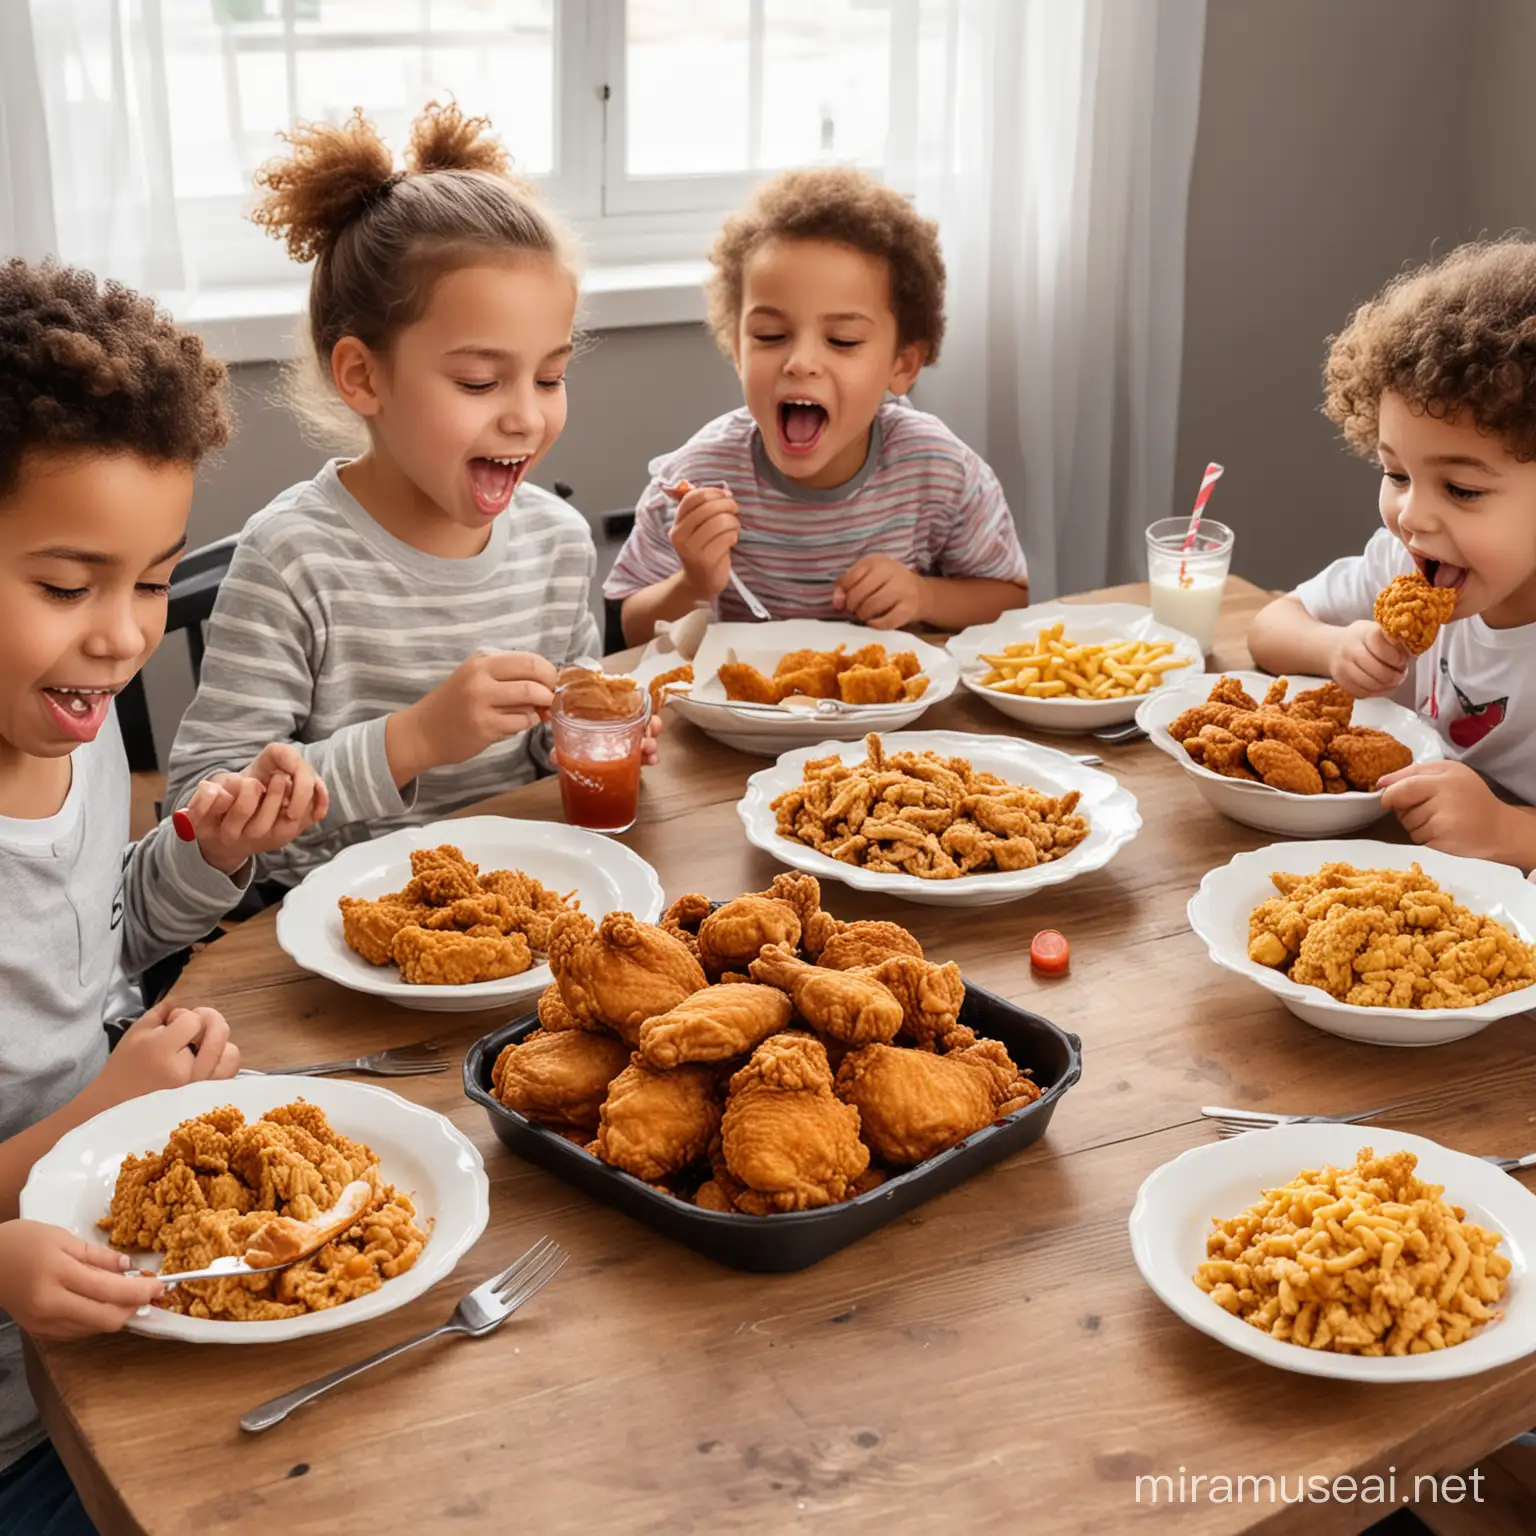 Kids eating table full of  fried chicken
